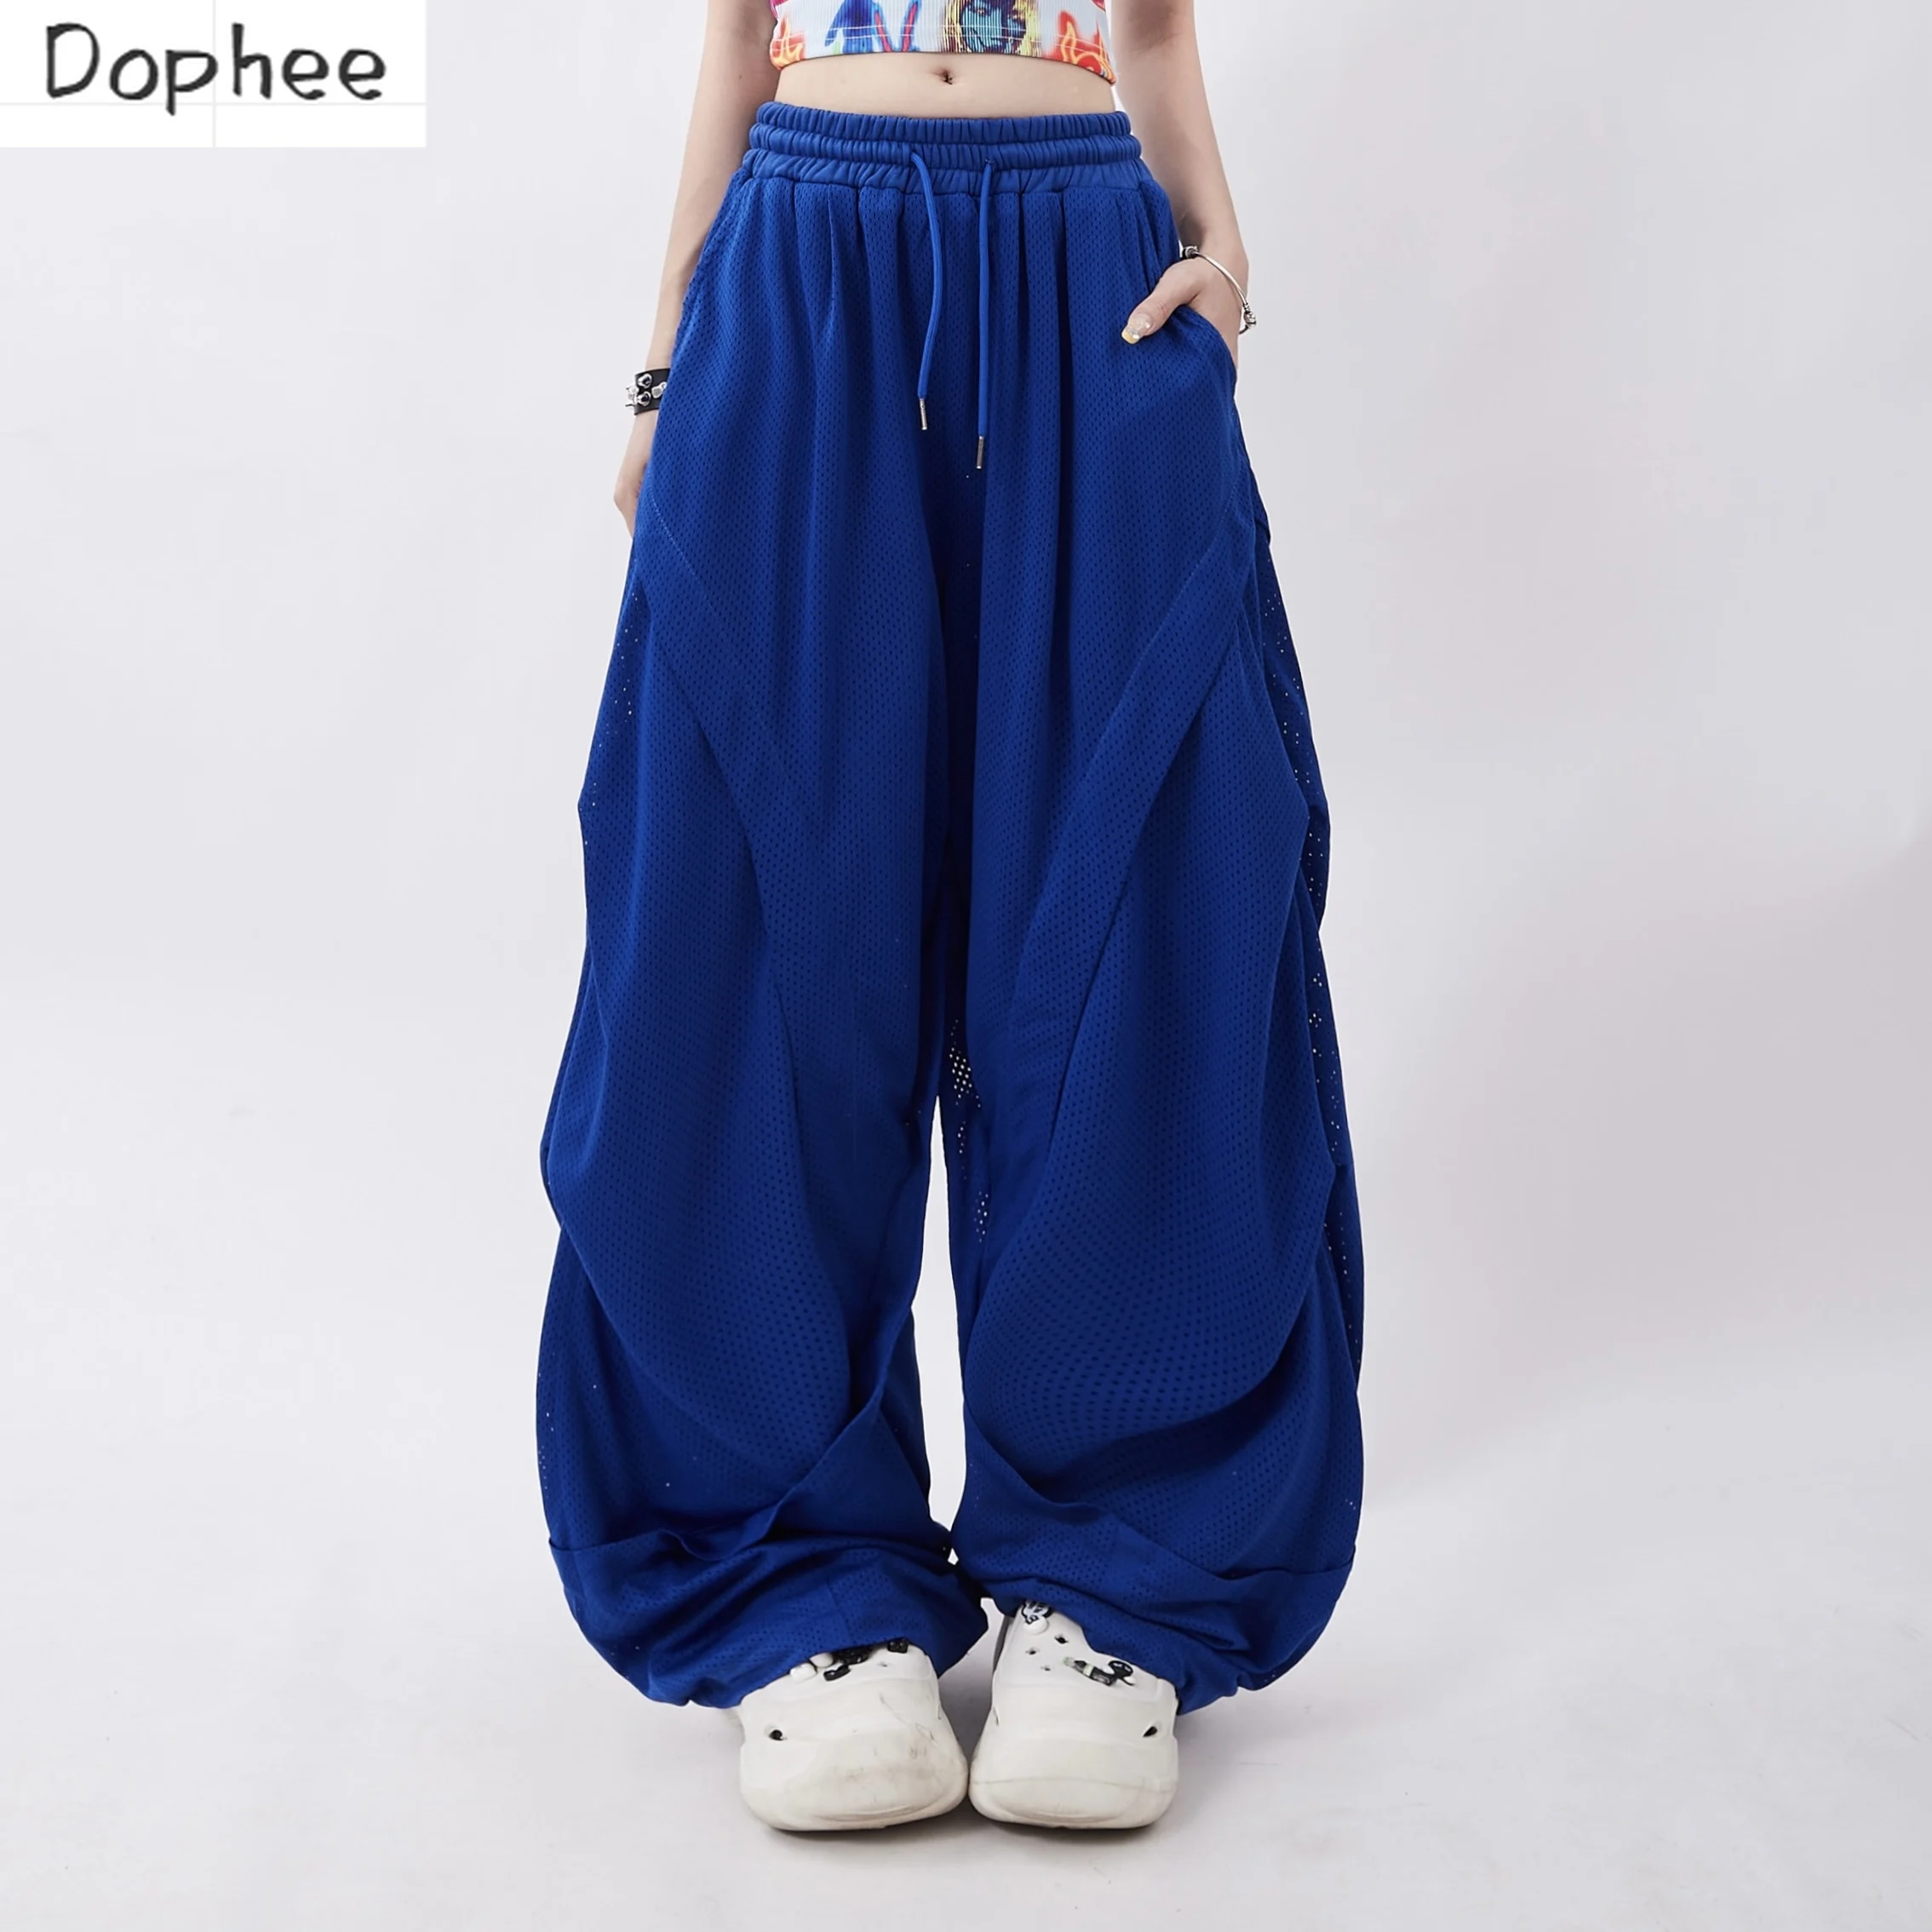 dophee-calca-feminina-casual-azul-klein-estilo-americano-calca-de-perna-larga-que-combina-com-tudo-para-verao-elastico-na-cintura-com-cordao